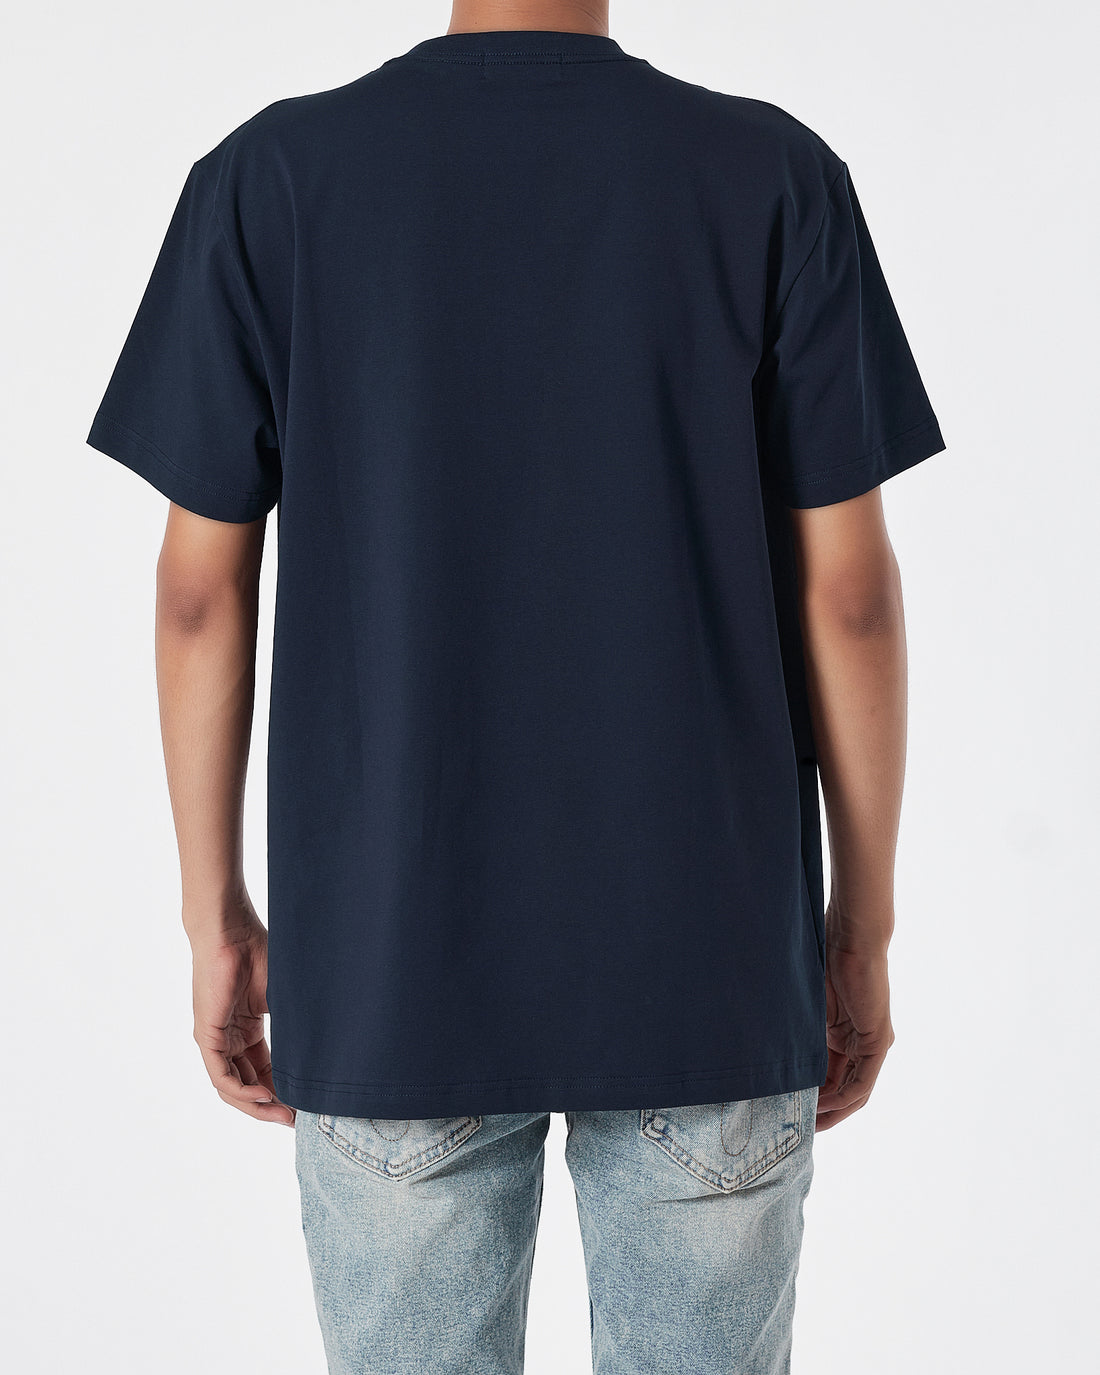 MKI Fox Embroidered Men Blue T-Shirt 14.90